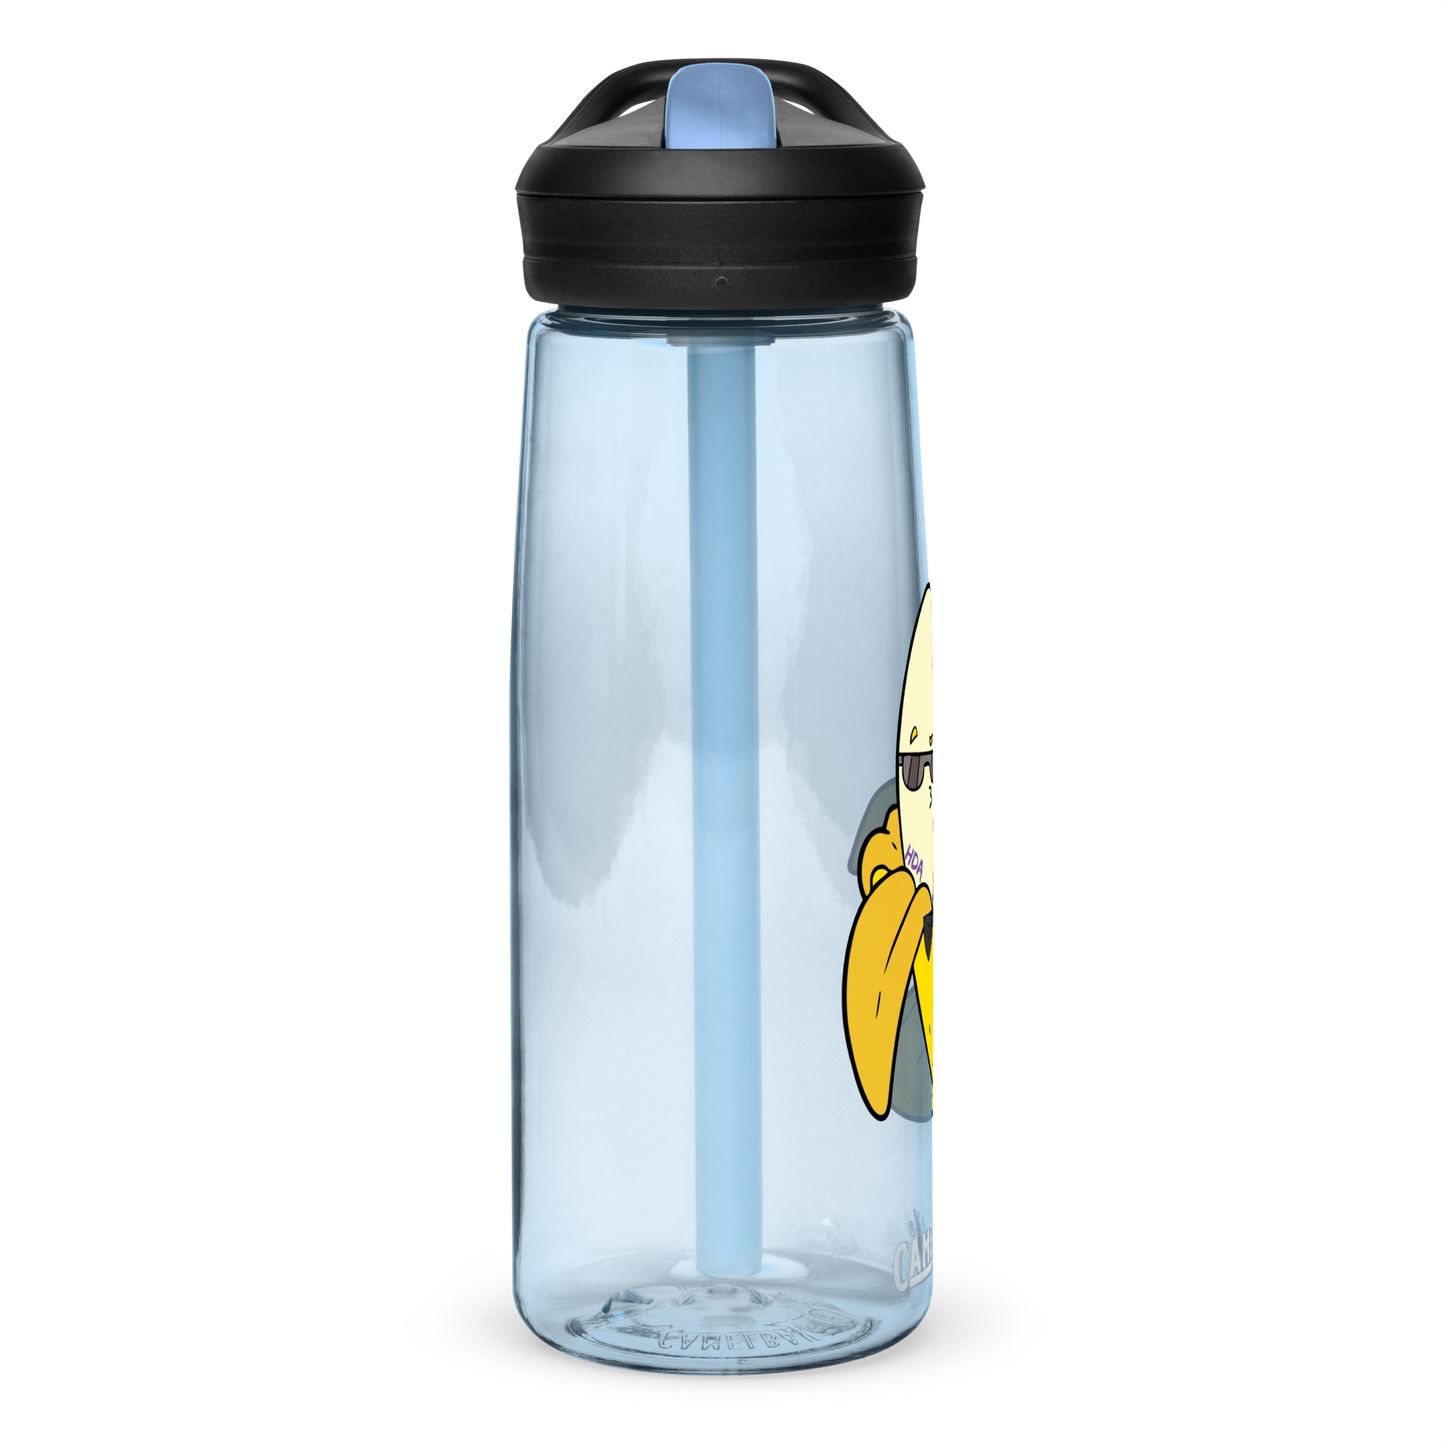 Banana Sports water bottle